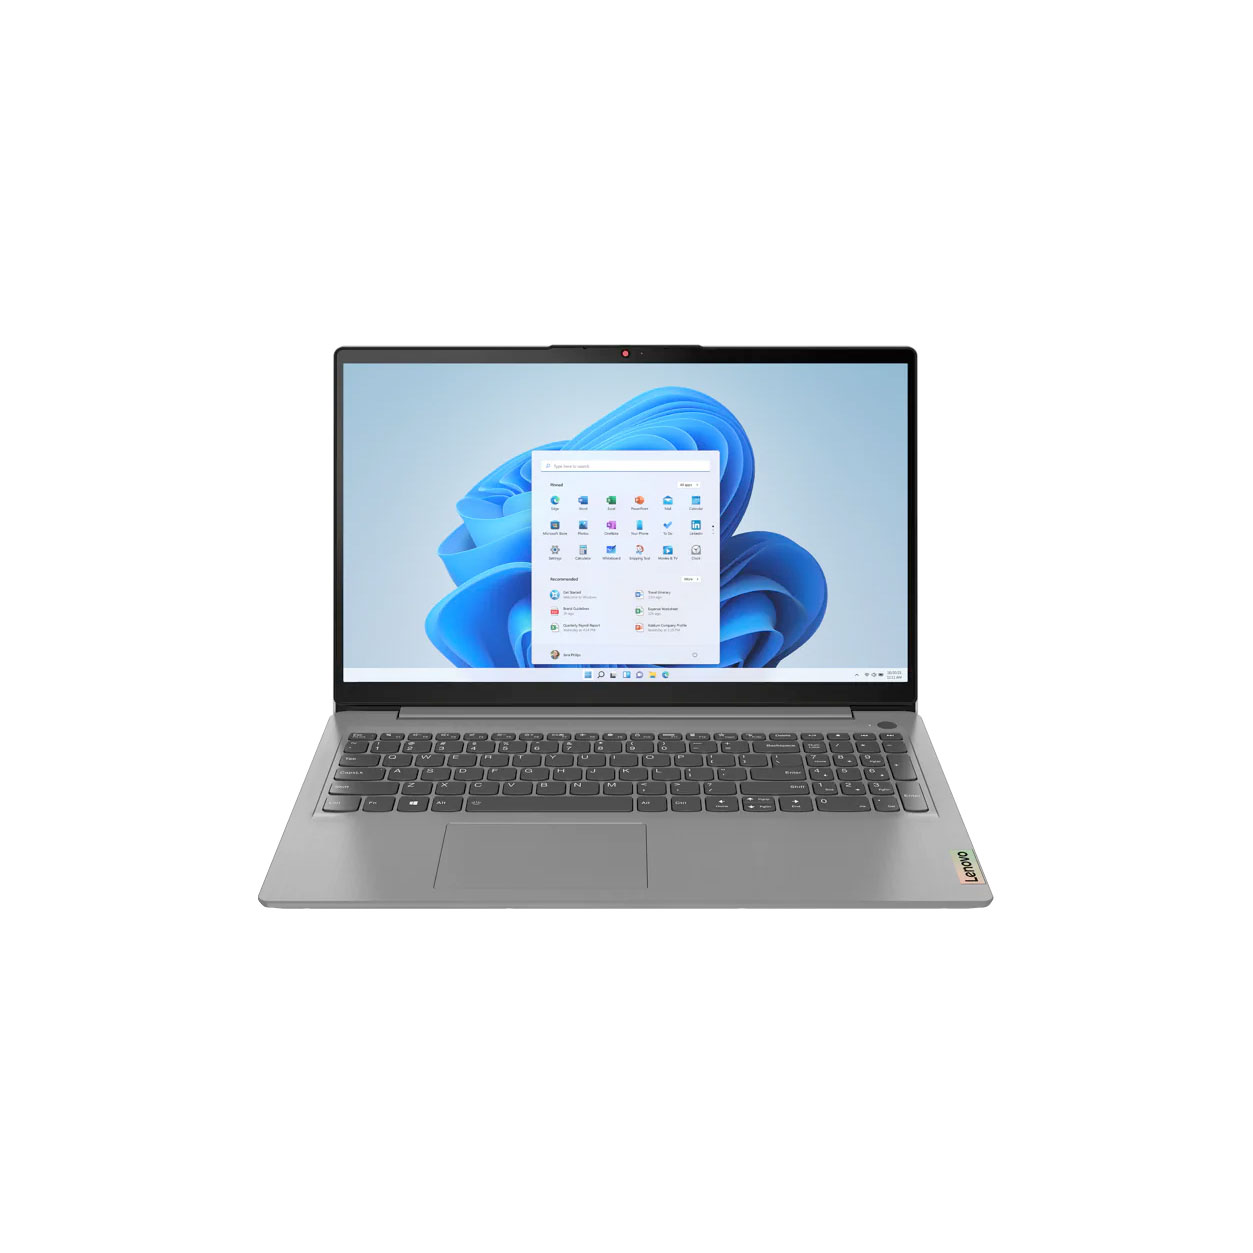 Microsoft：Lenovo IdeaPad 15.6吋 Laptop只賣$339.99